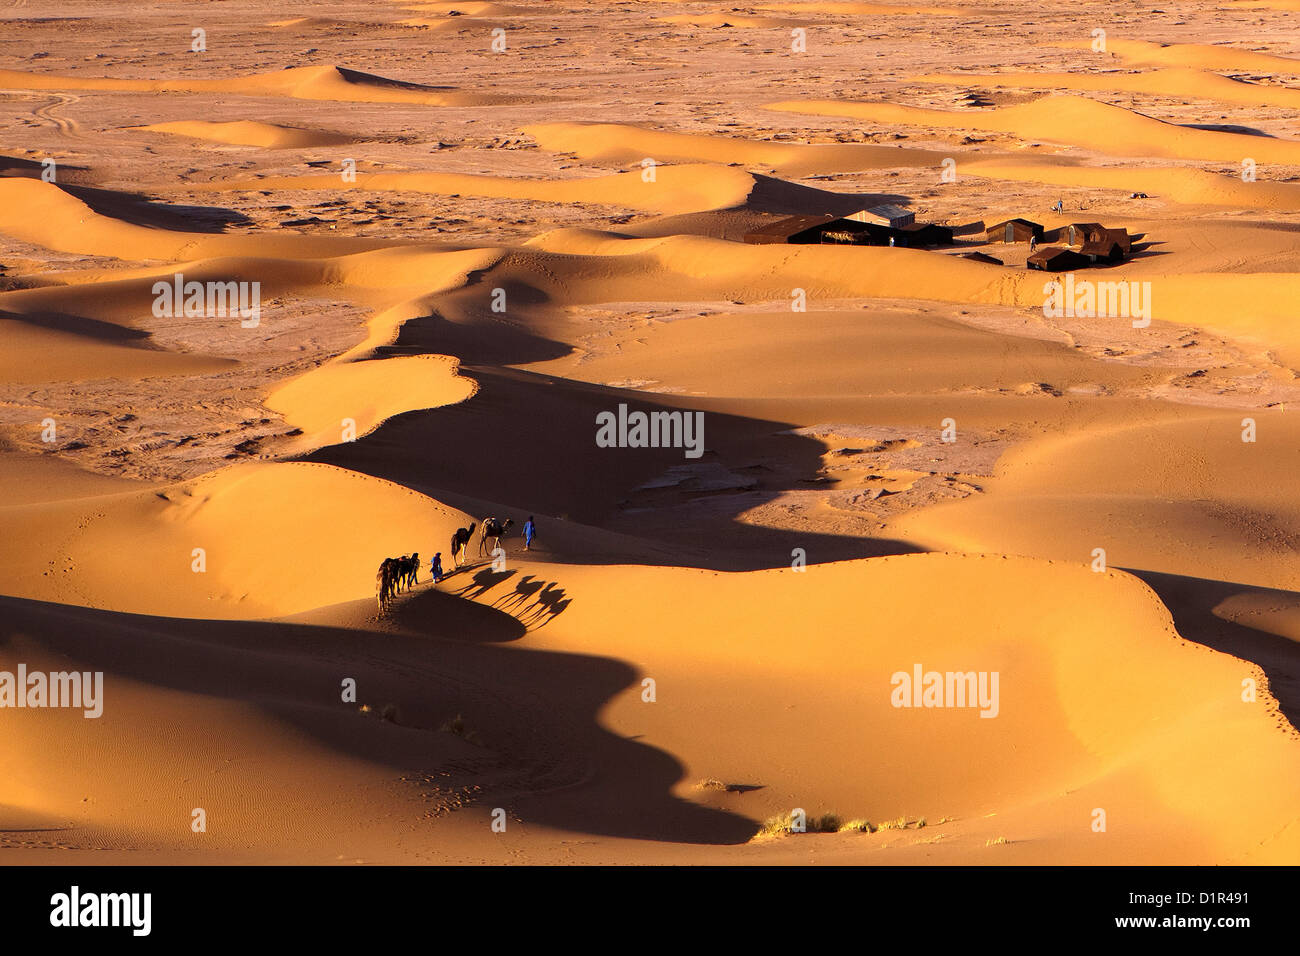 Morocco, M'Hamid, Erg Chigaga sand dunes. Sahara desert. Tourist camp, bivouac. Camel caravan. Stock Photo